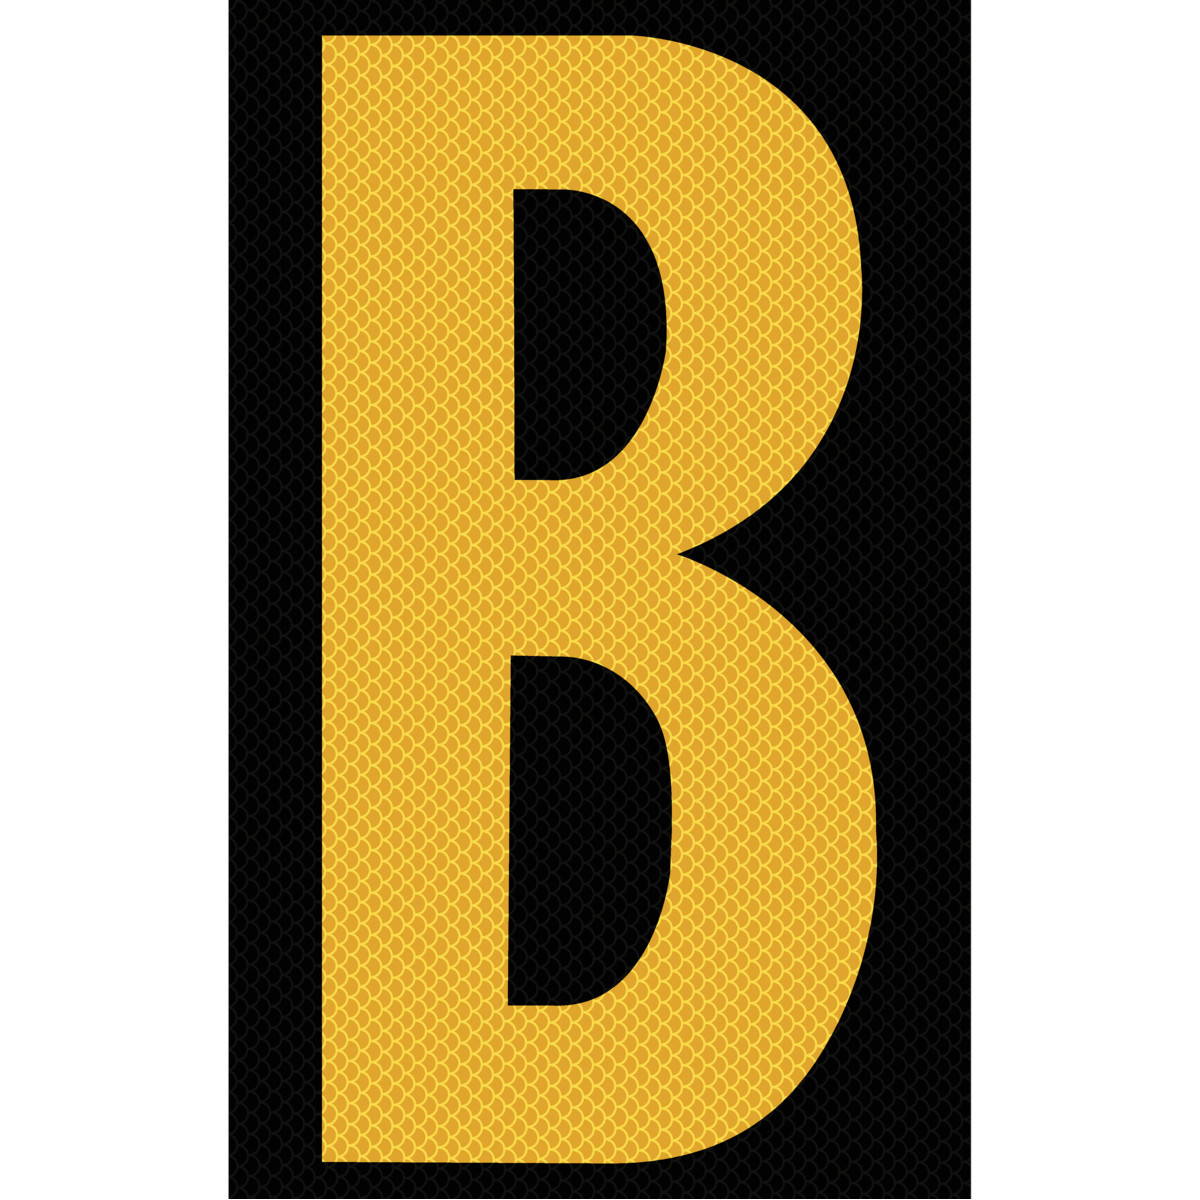 3" Yellow on Black High Intensity Reflective "B"